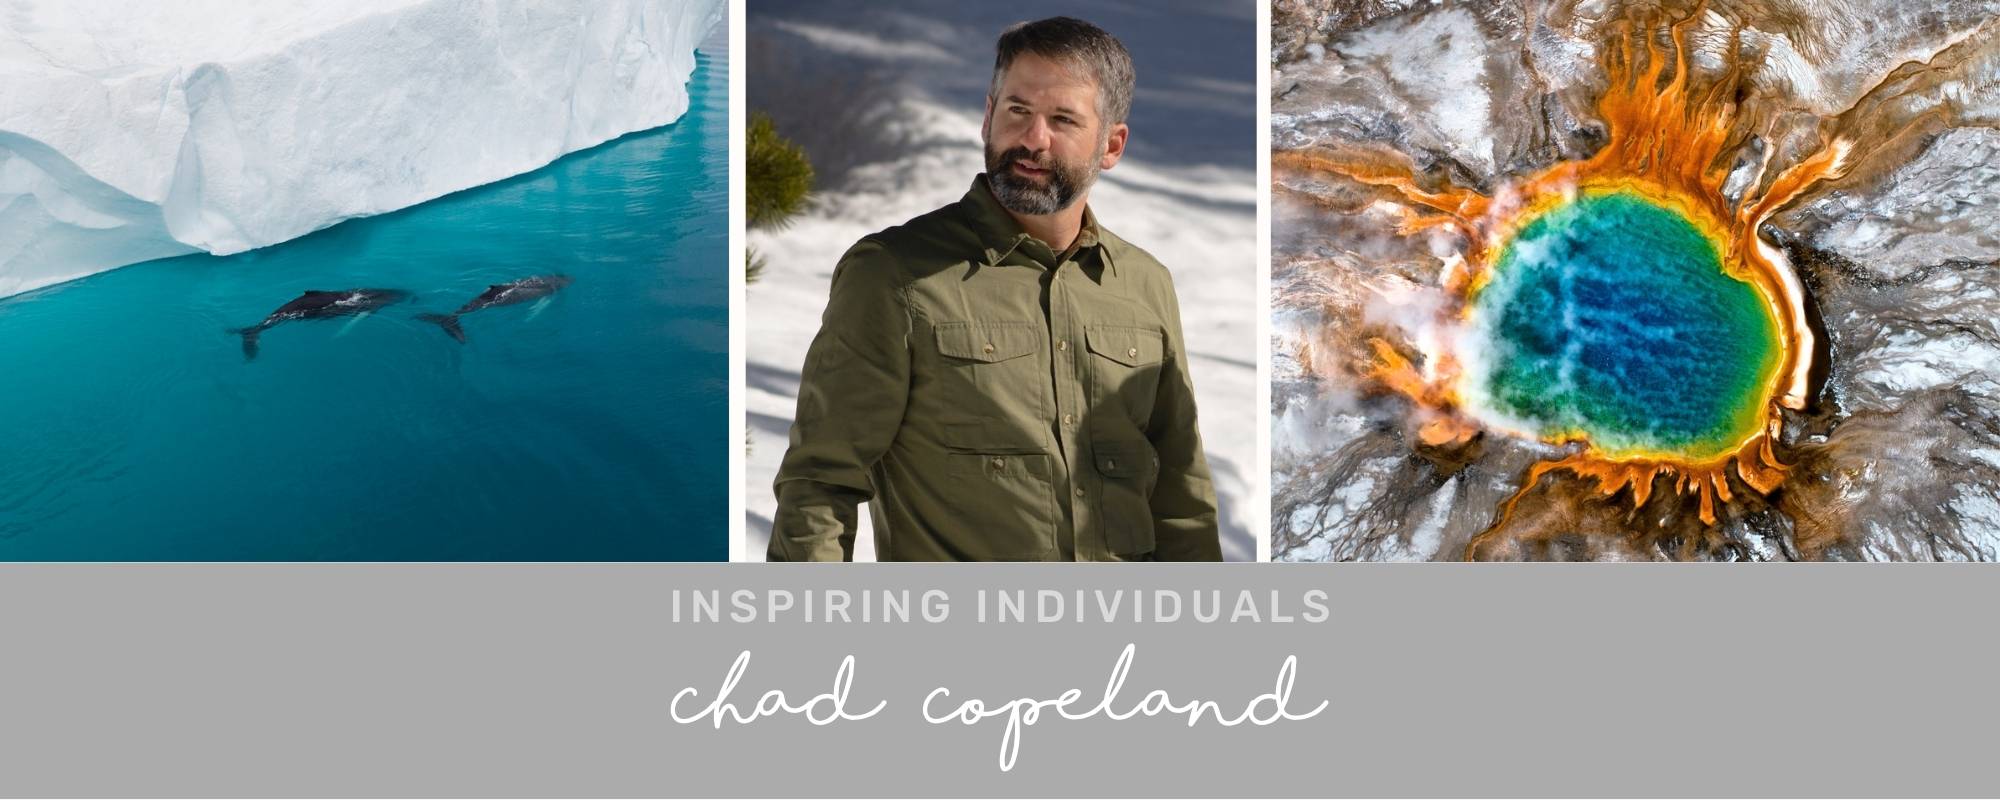 INSPIRING INDIVIDUAL: Chad Copeland